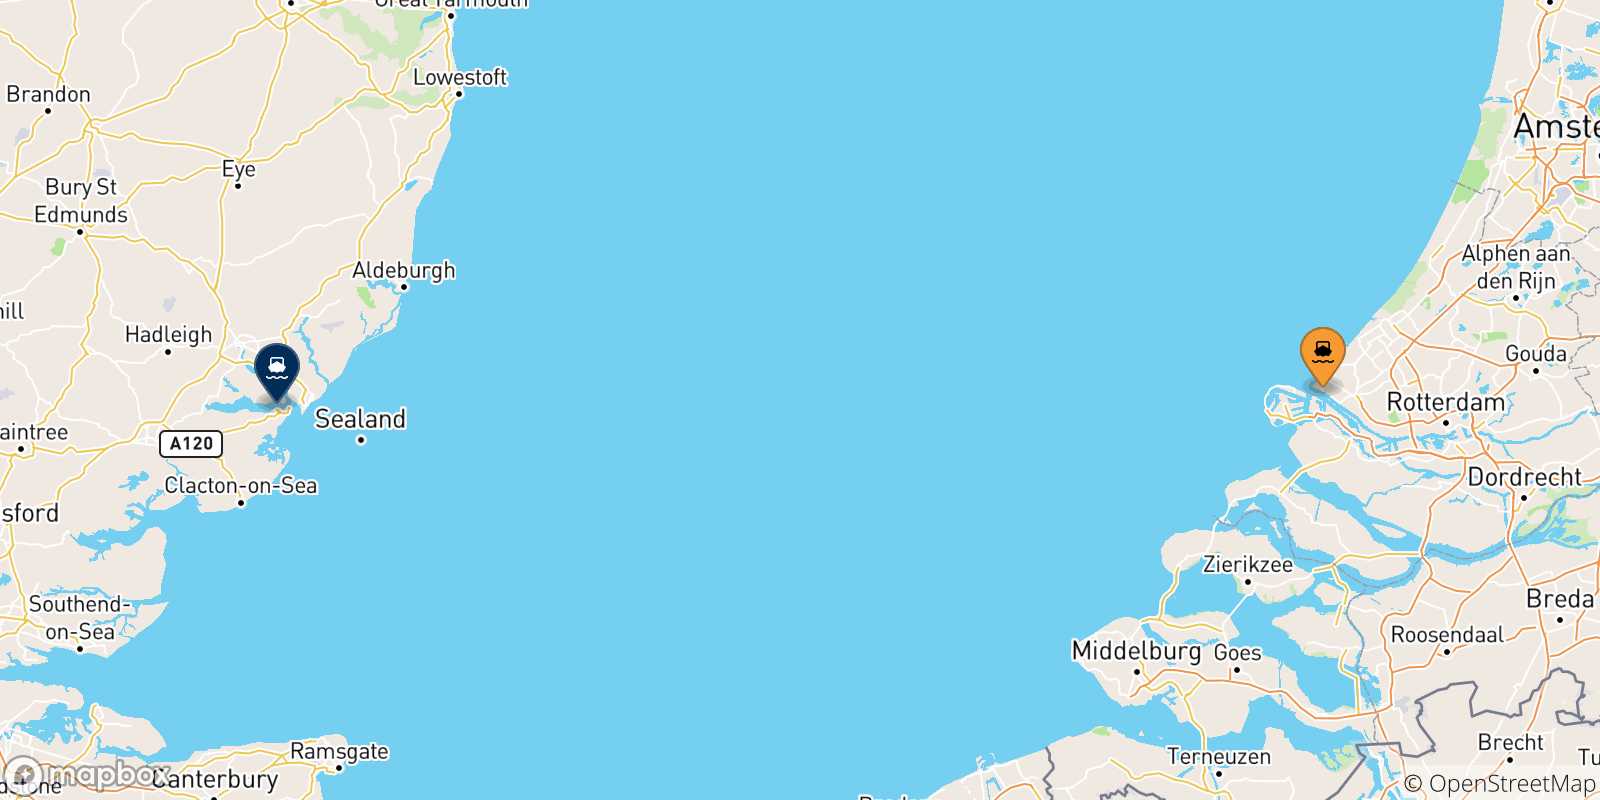 Mappa delle possibili rotte tra Hoek Van Holland e l'Inghilterra